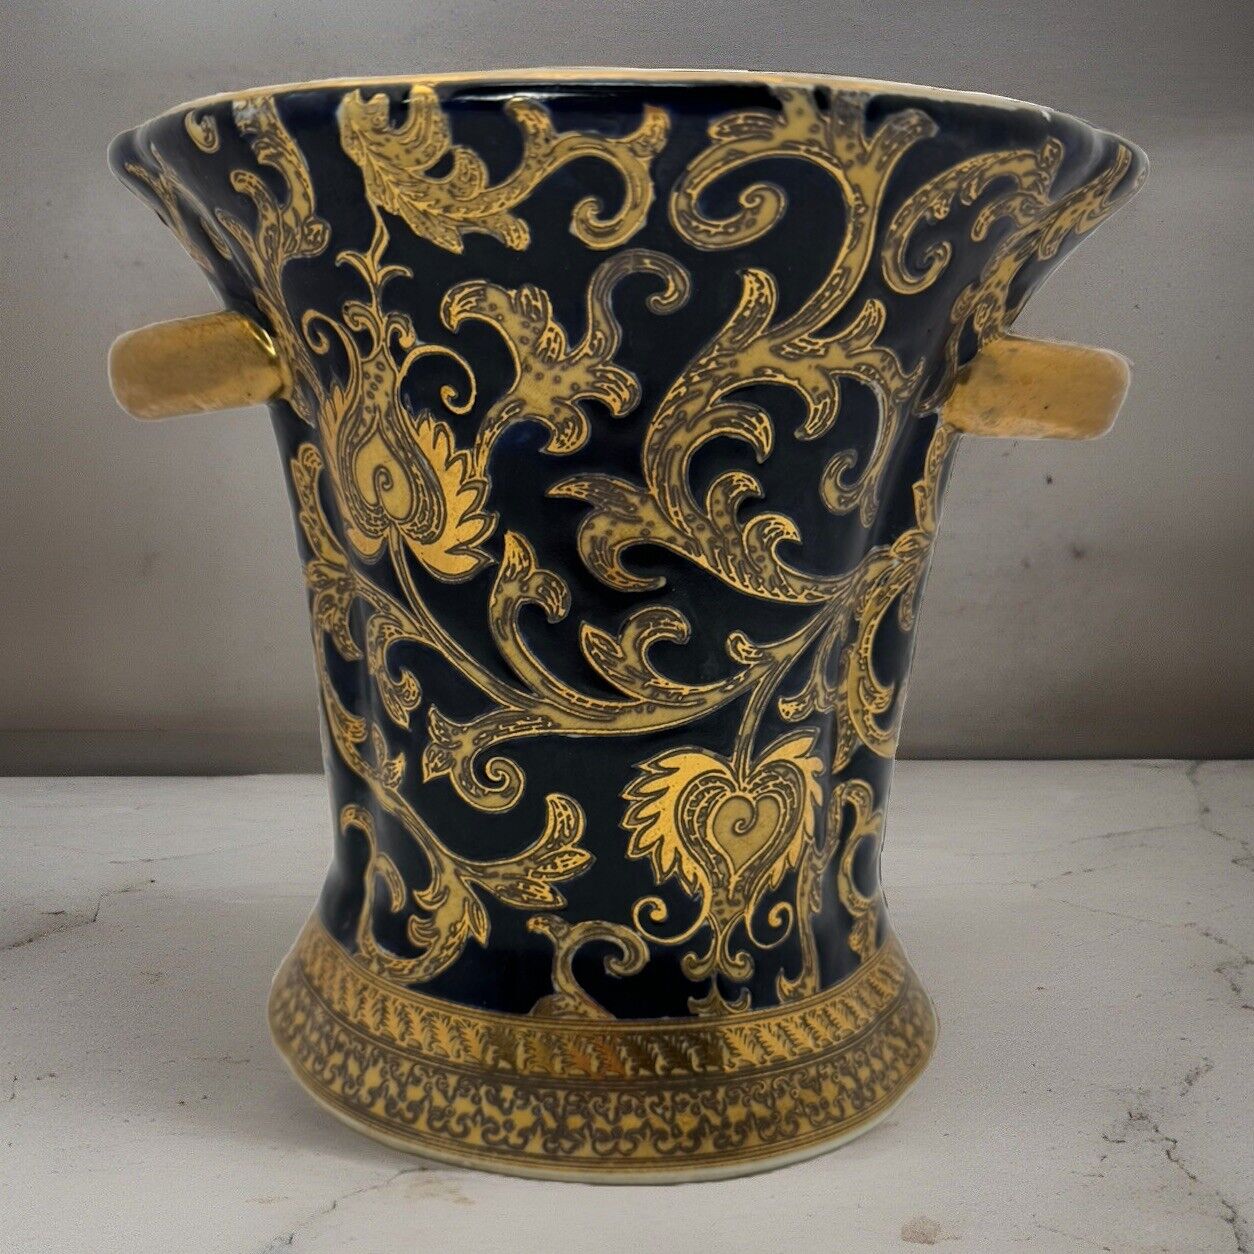 Chinese Vase with Handles Vintage Cobalt Blue & Gold Great Find Home Decor